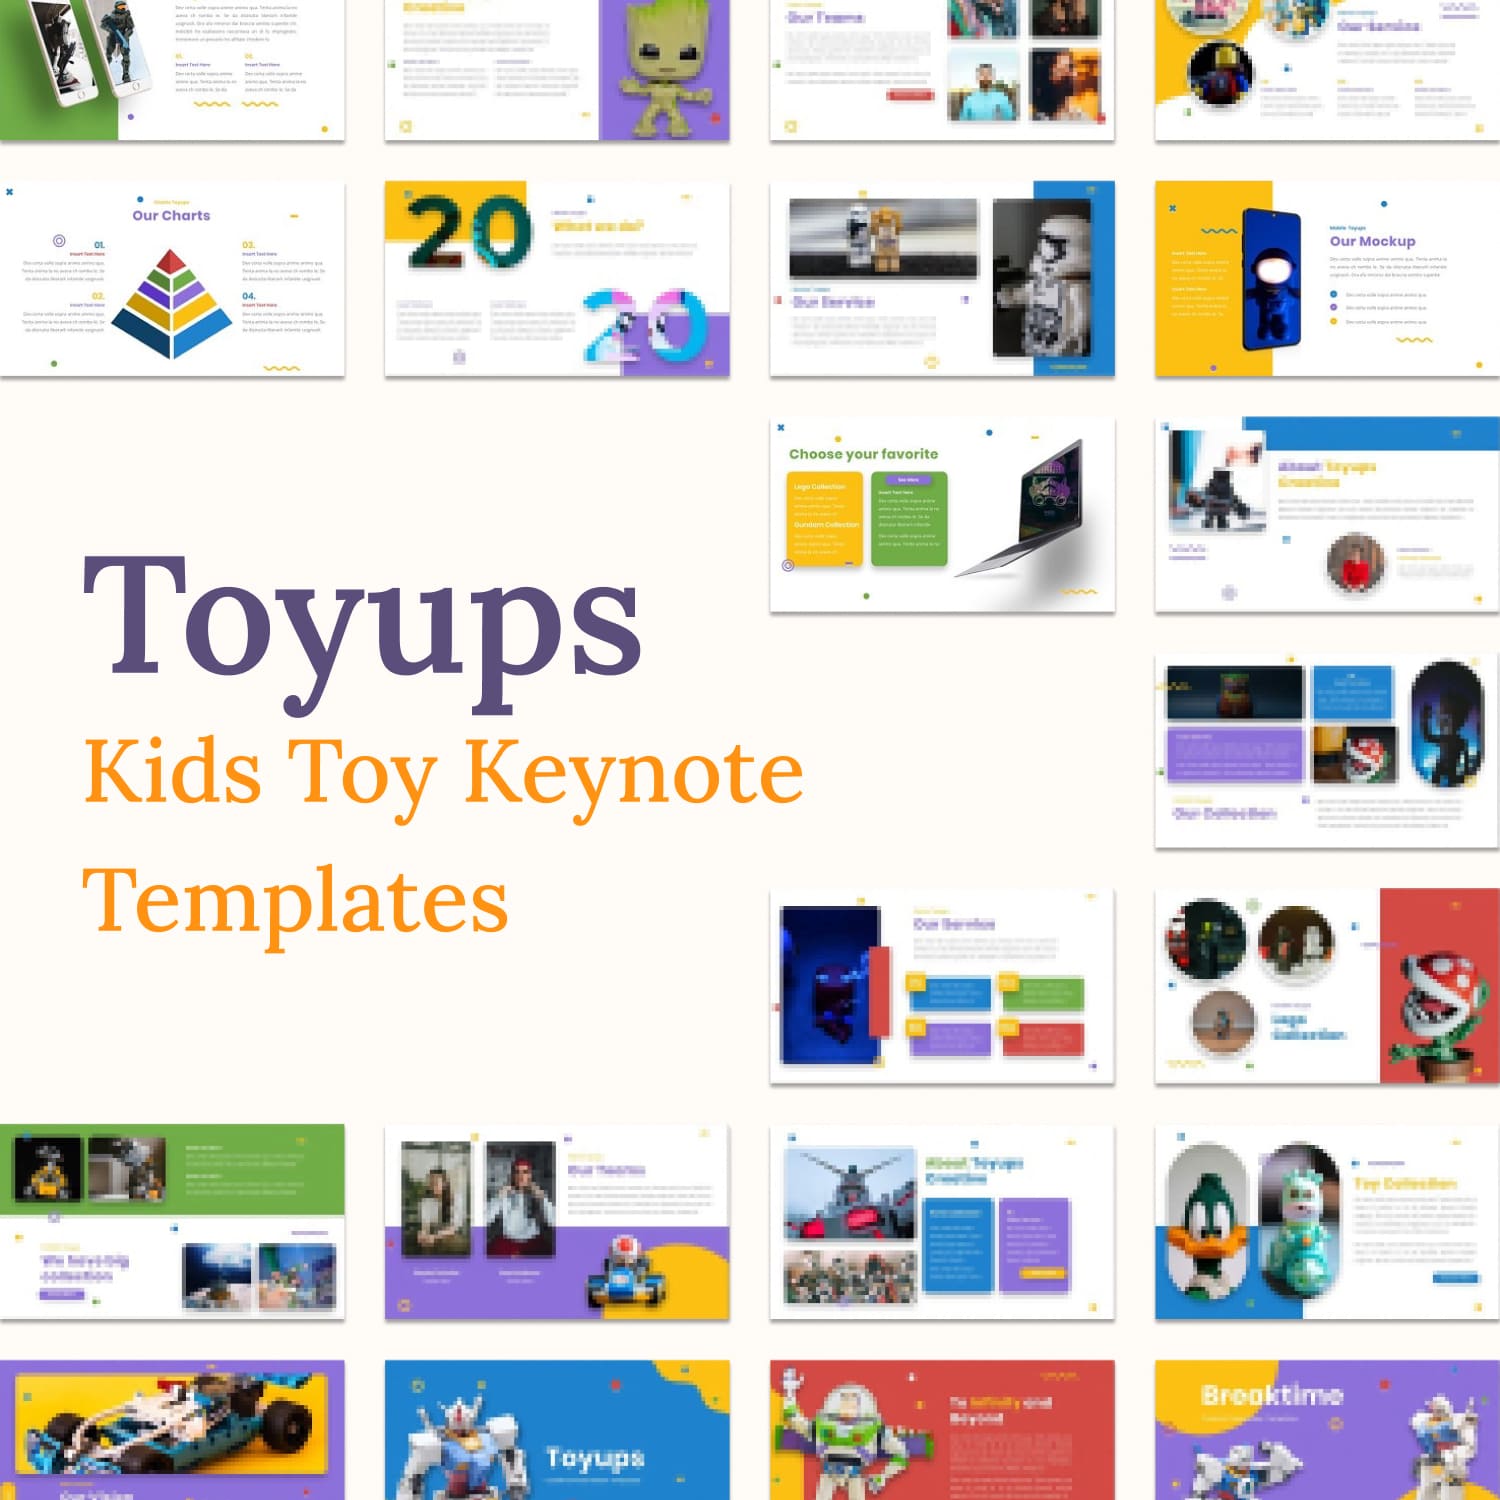 Toyups - Kids Toy Keynote Templates.